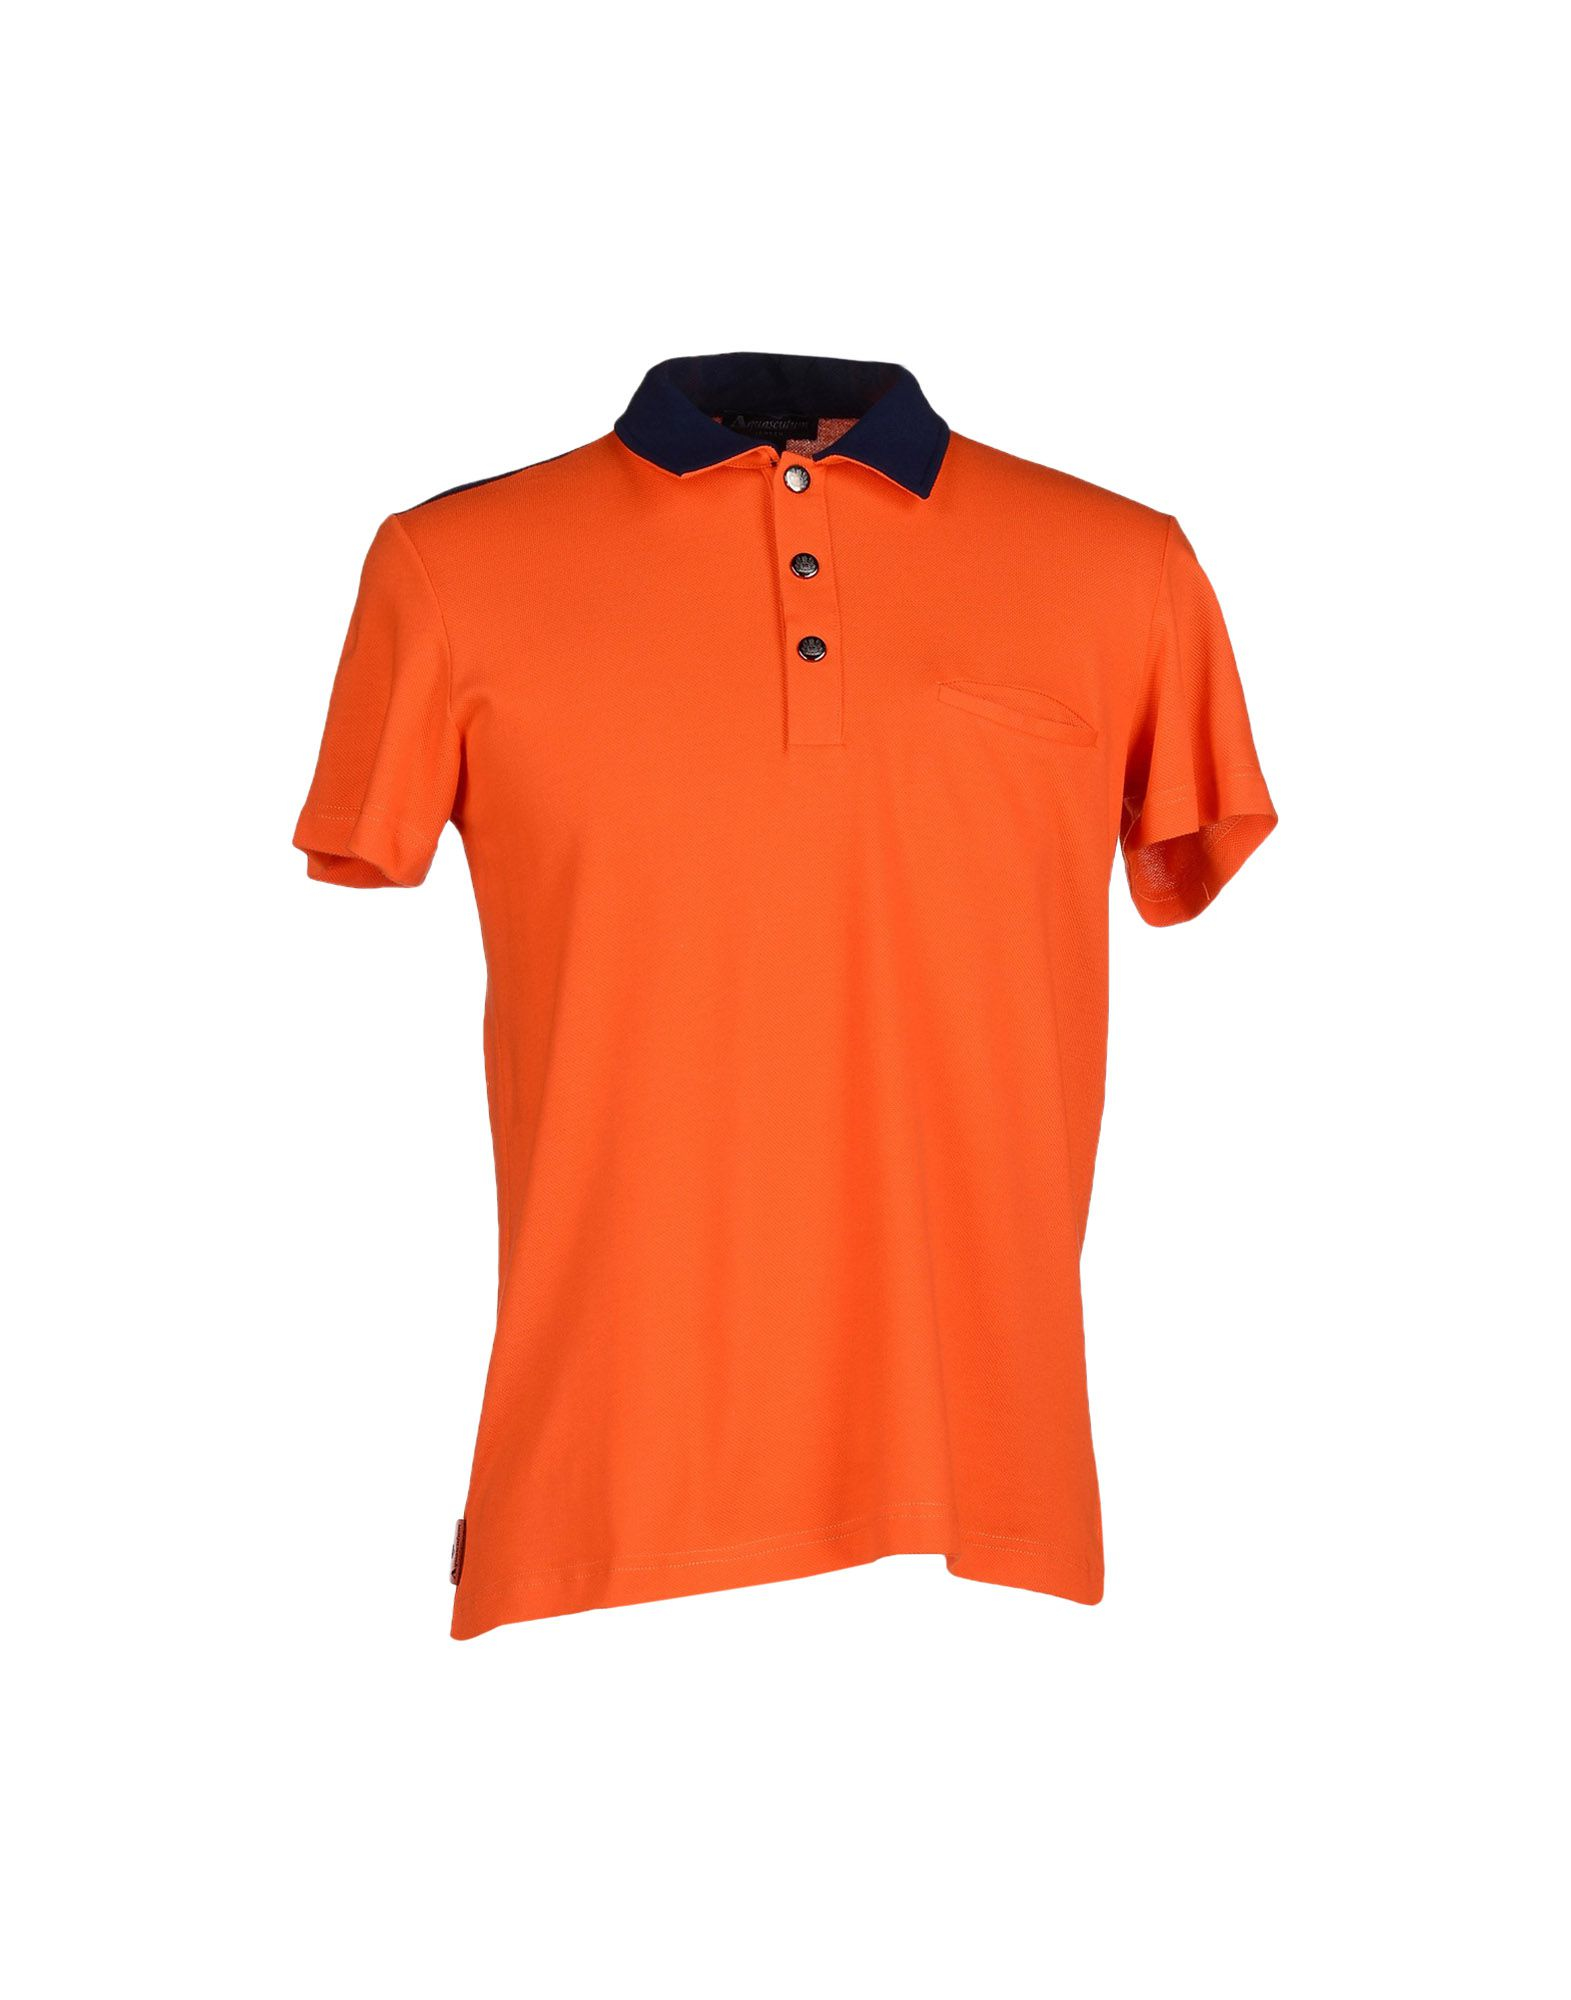 Lyst - Aquascutum Polo Shirt in Orange for Men